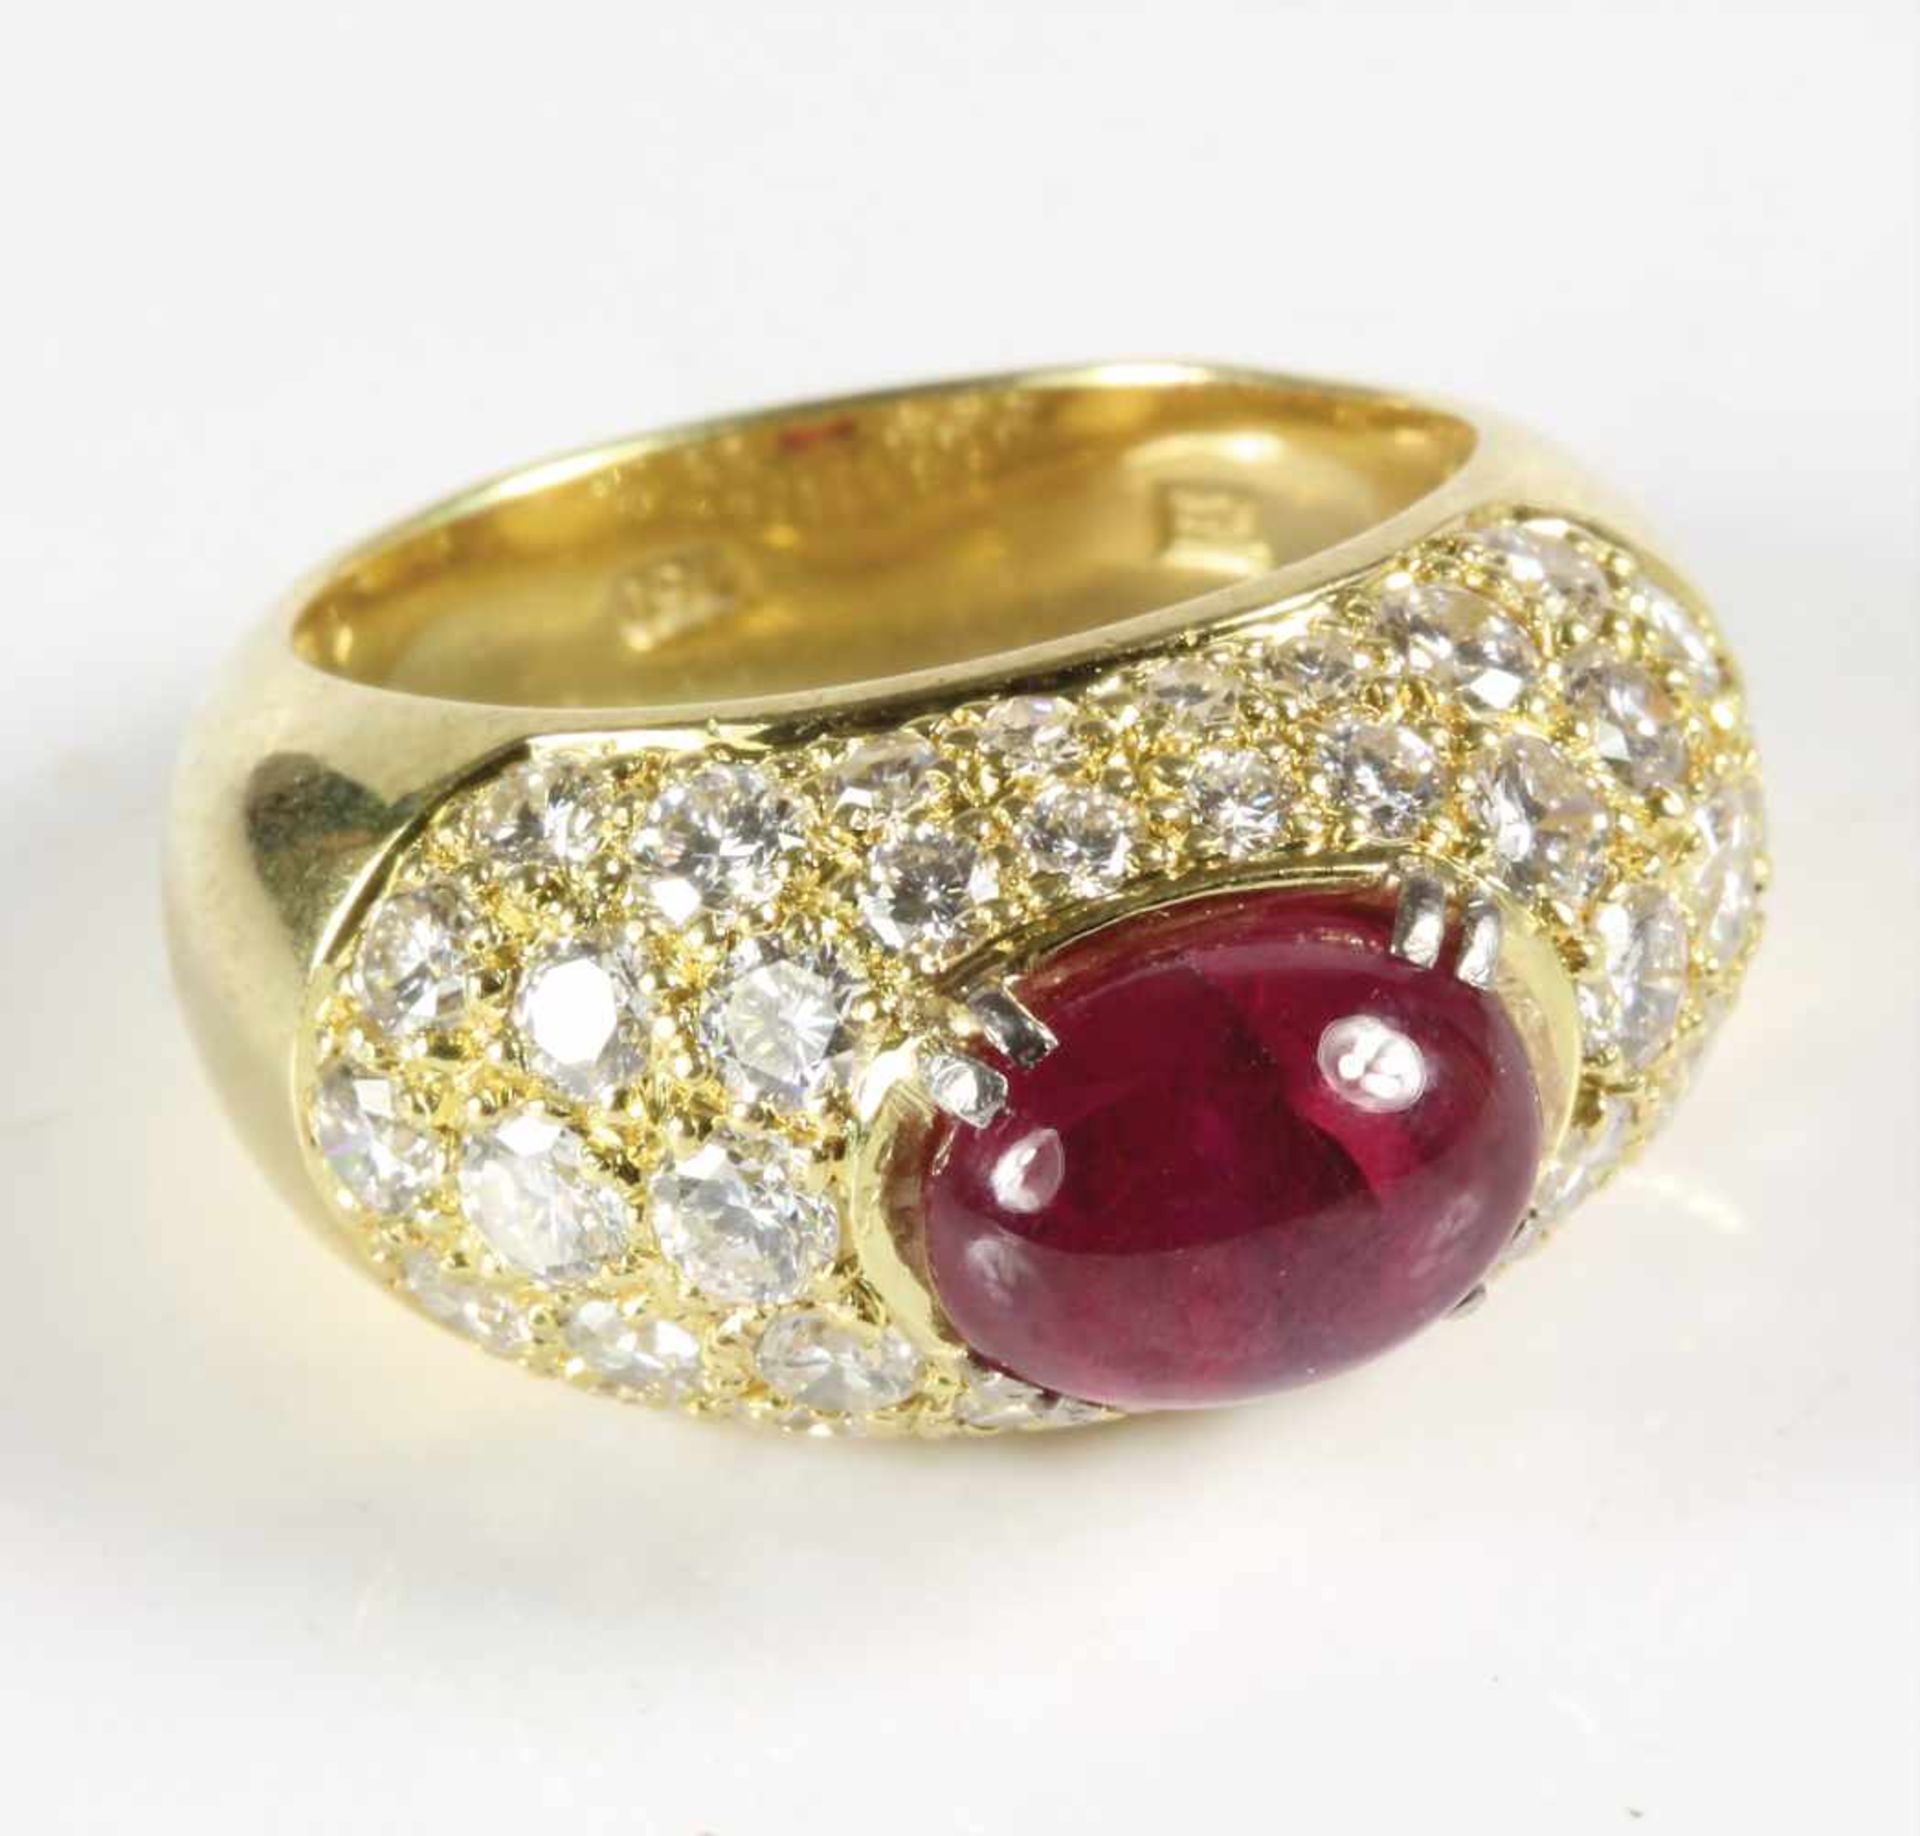 Ring, GG 750/000, zentraler Rubincabochon ca. 2,5 ct, kompletter Ringkopf mit Brillanten ausgefasst,